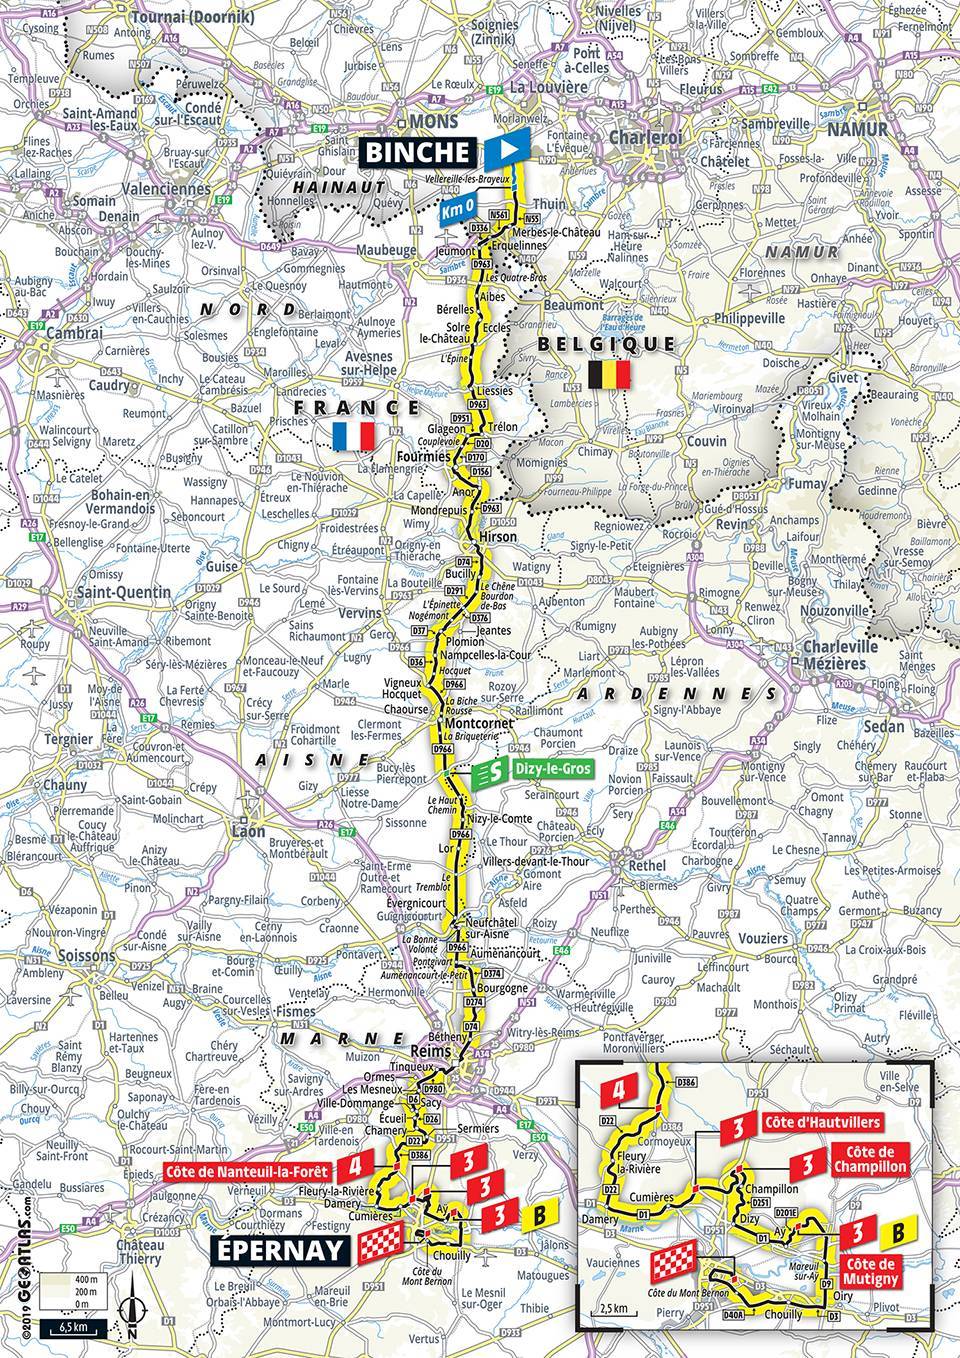 Streckenverlauf Tour de France 2019 - Etappe 3